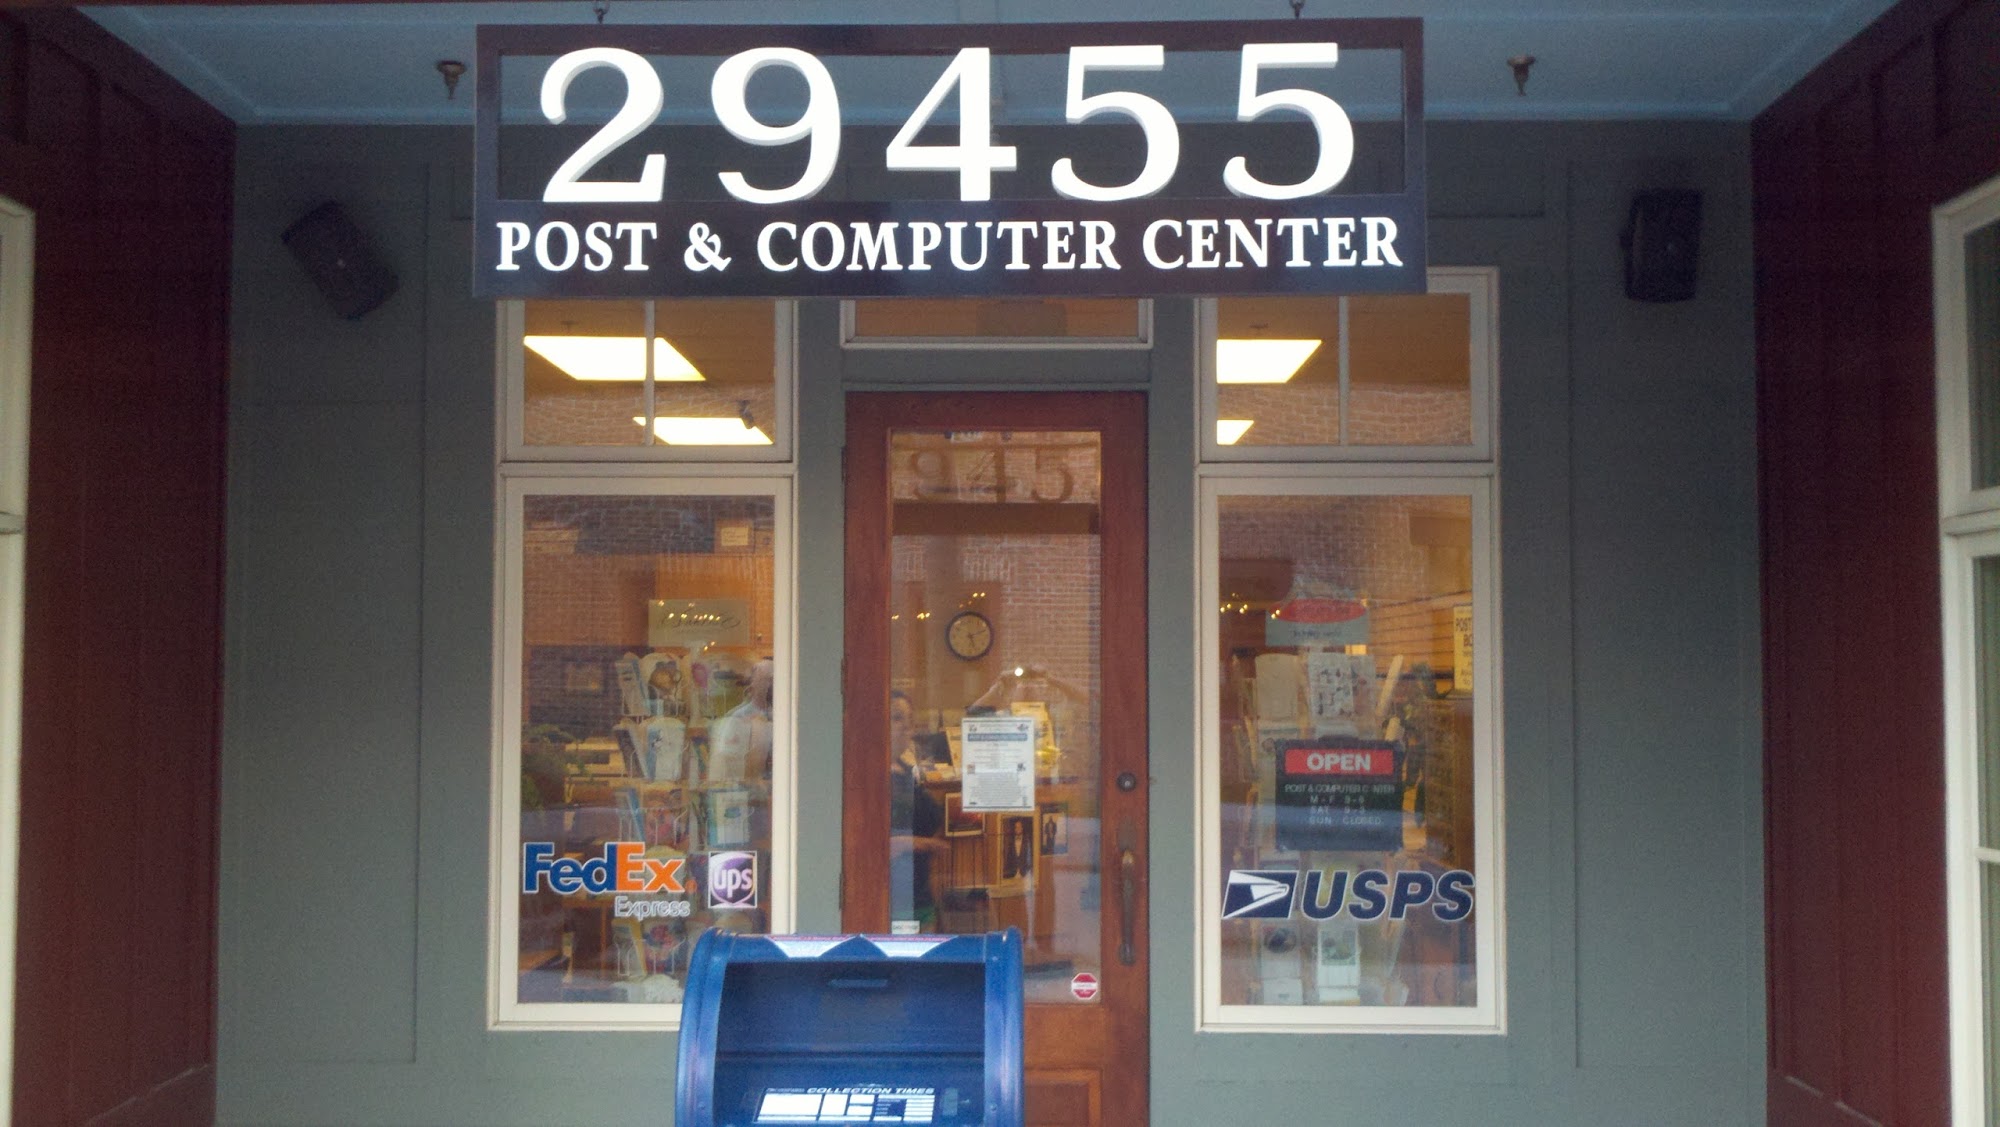 Post & Computer Center